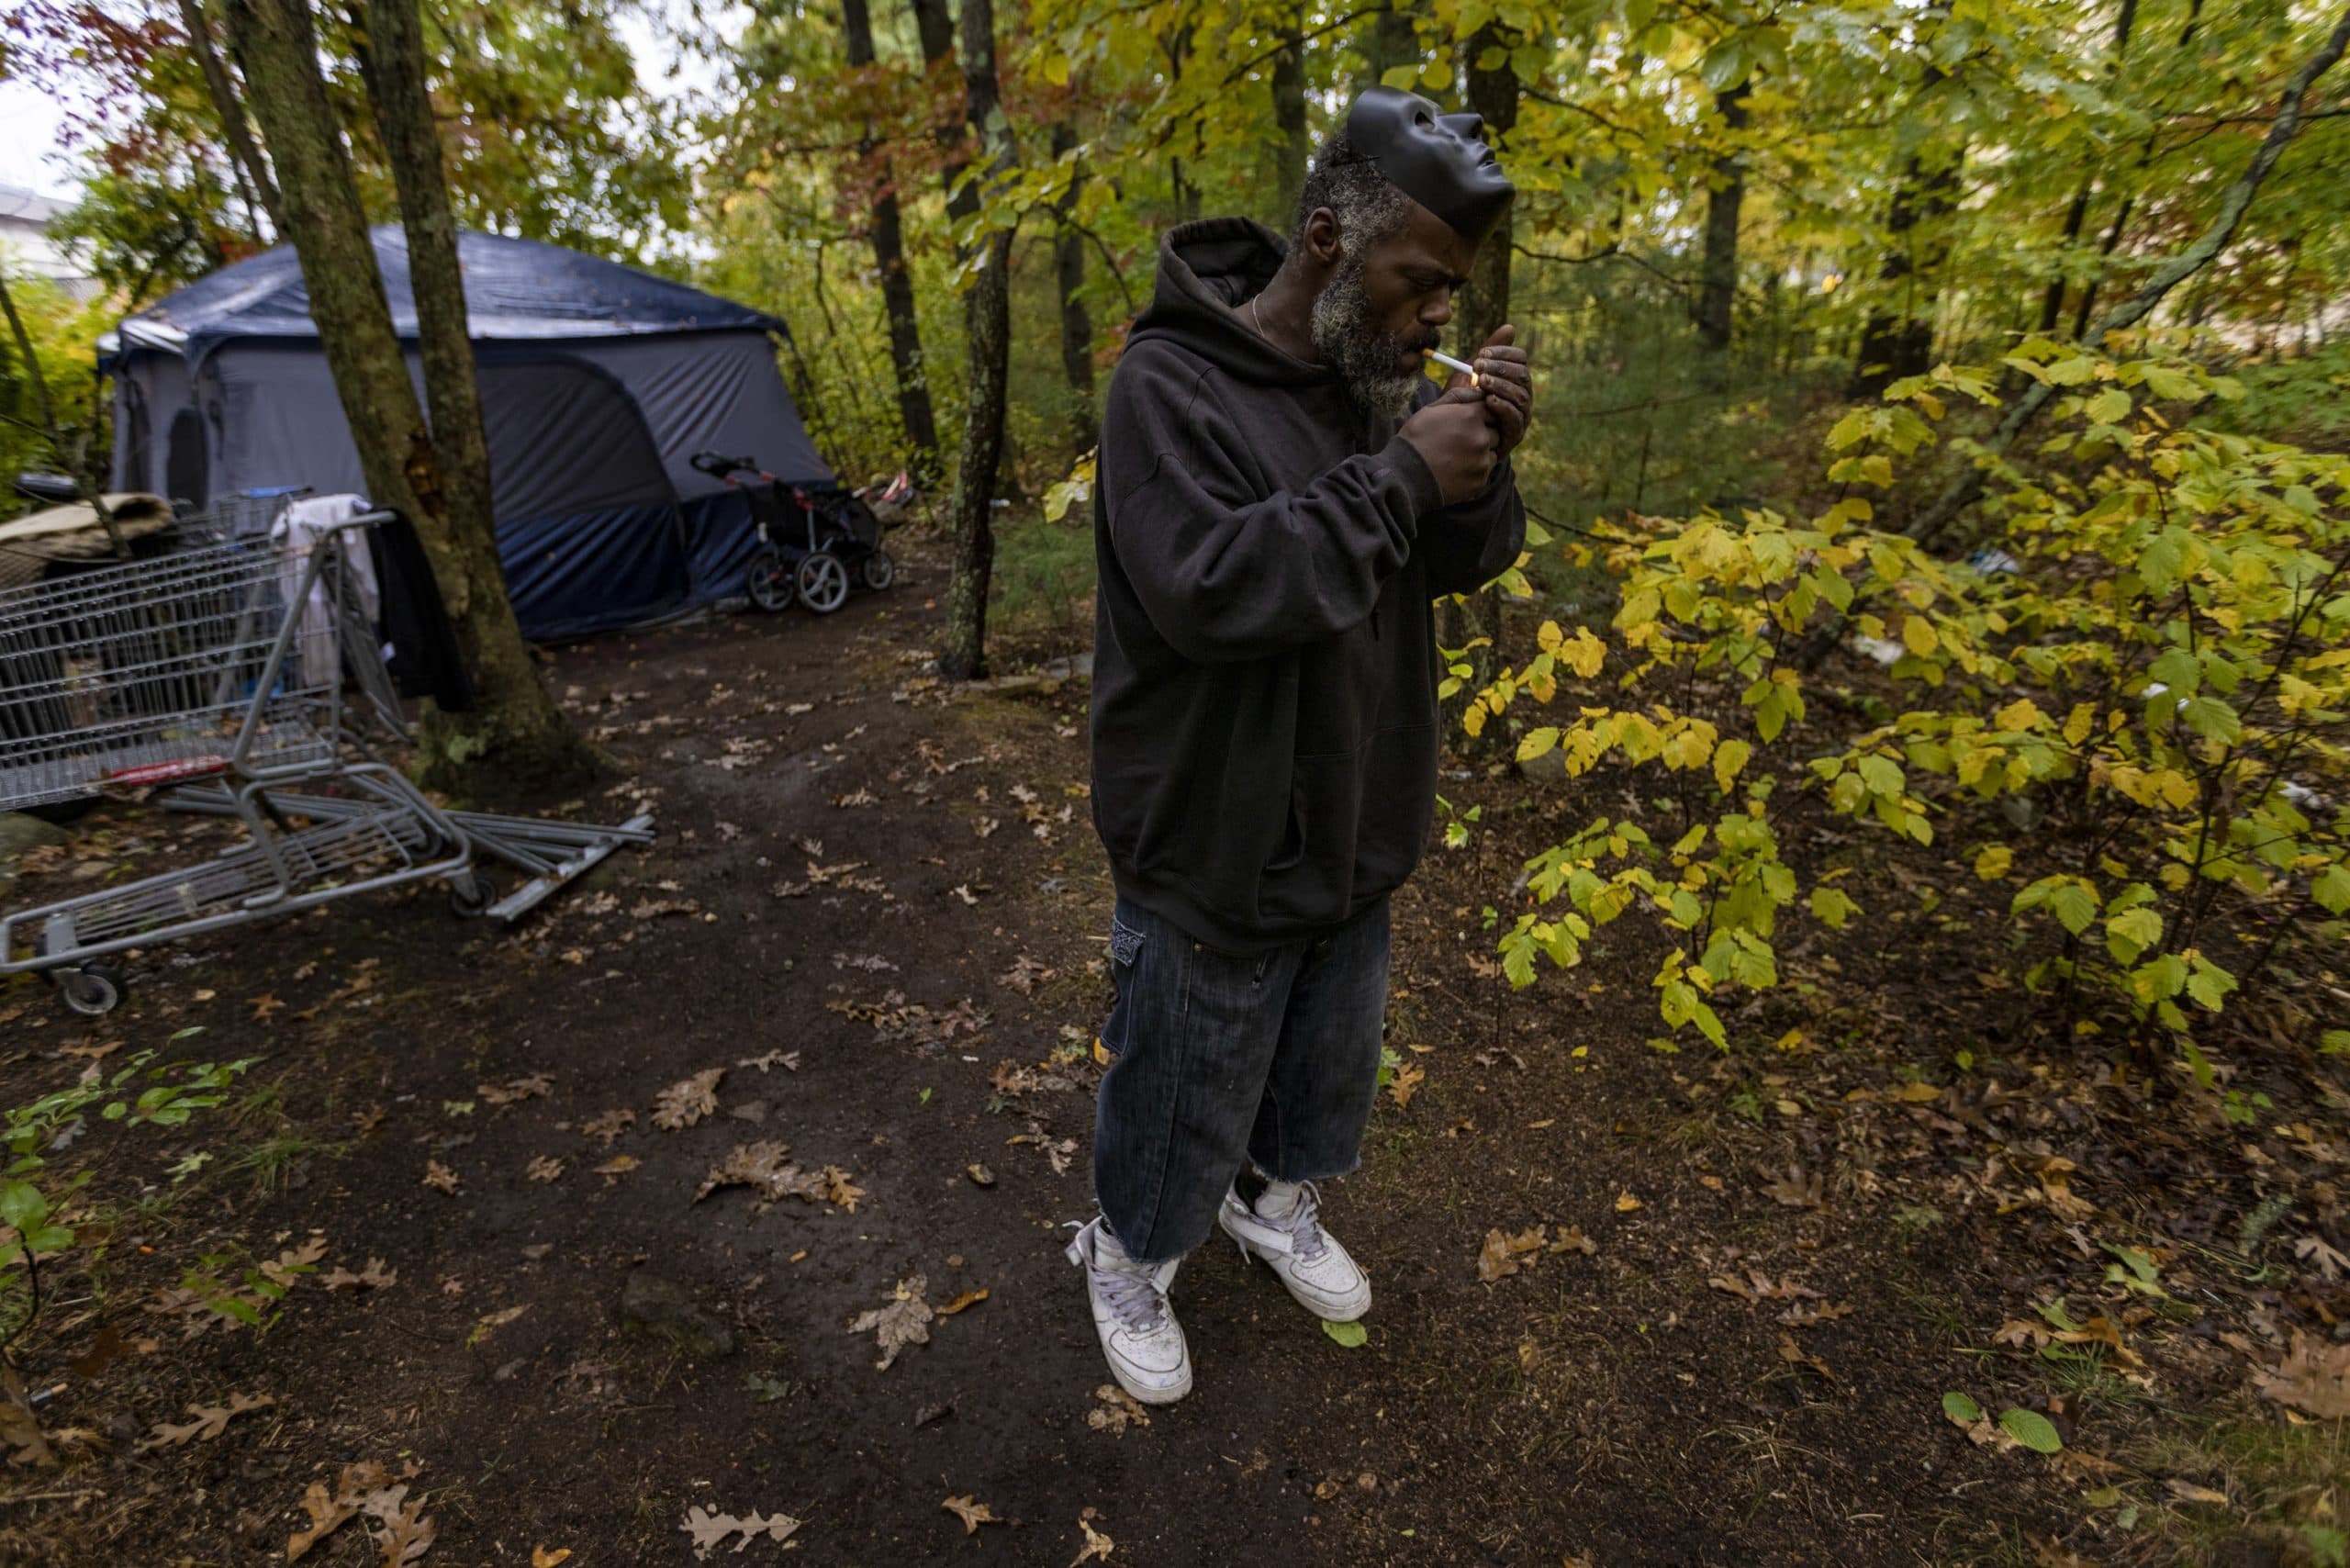 Dave outside his tent, lighting a cigarette. (Jesse Costa/WBUR)